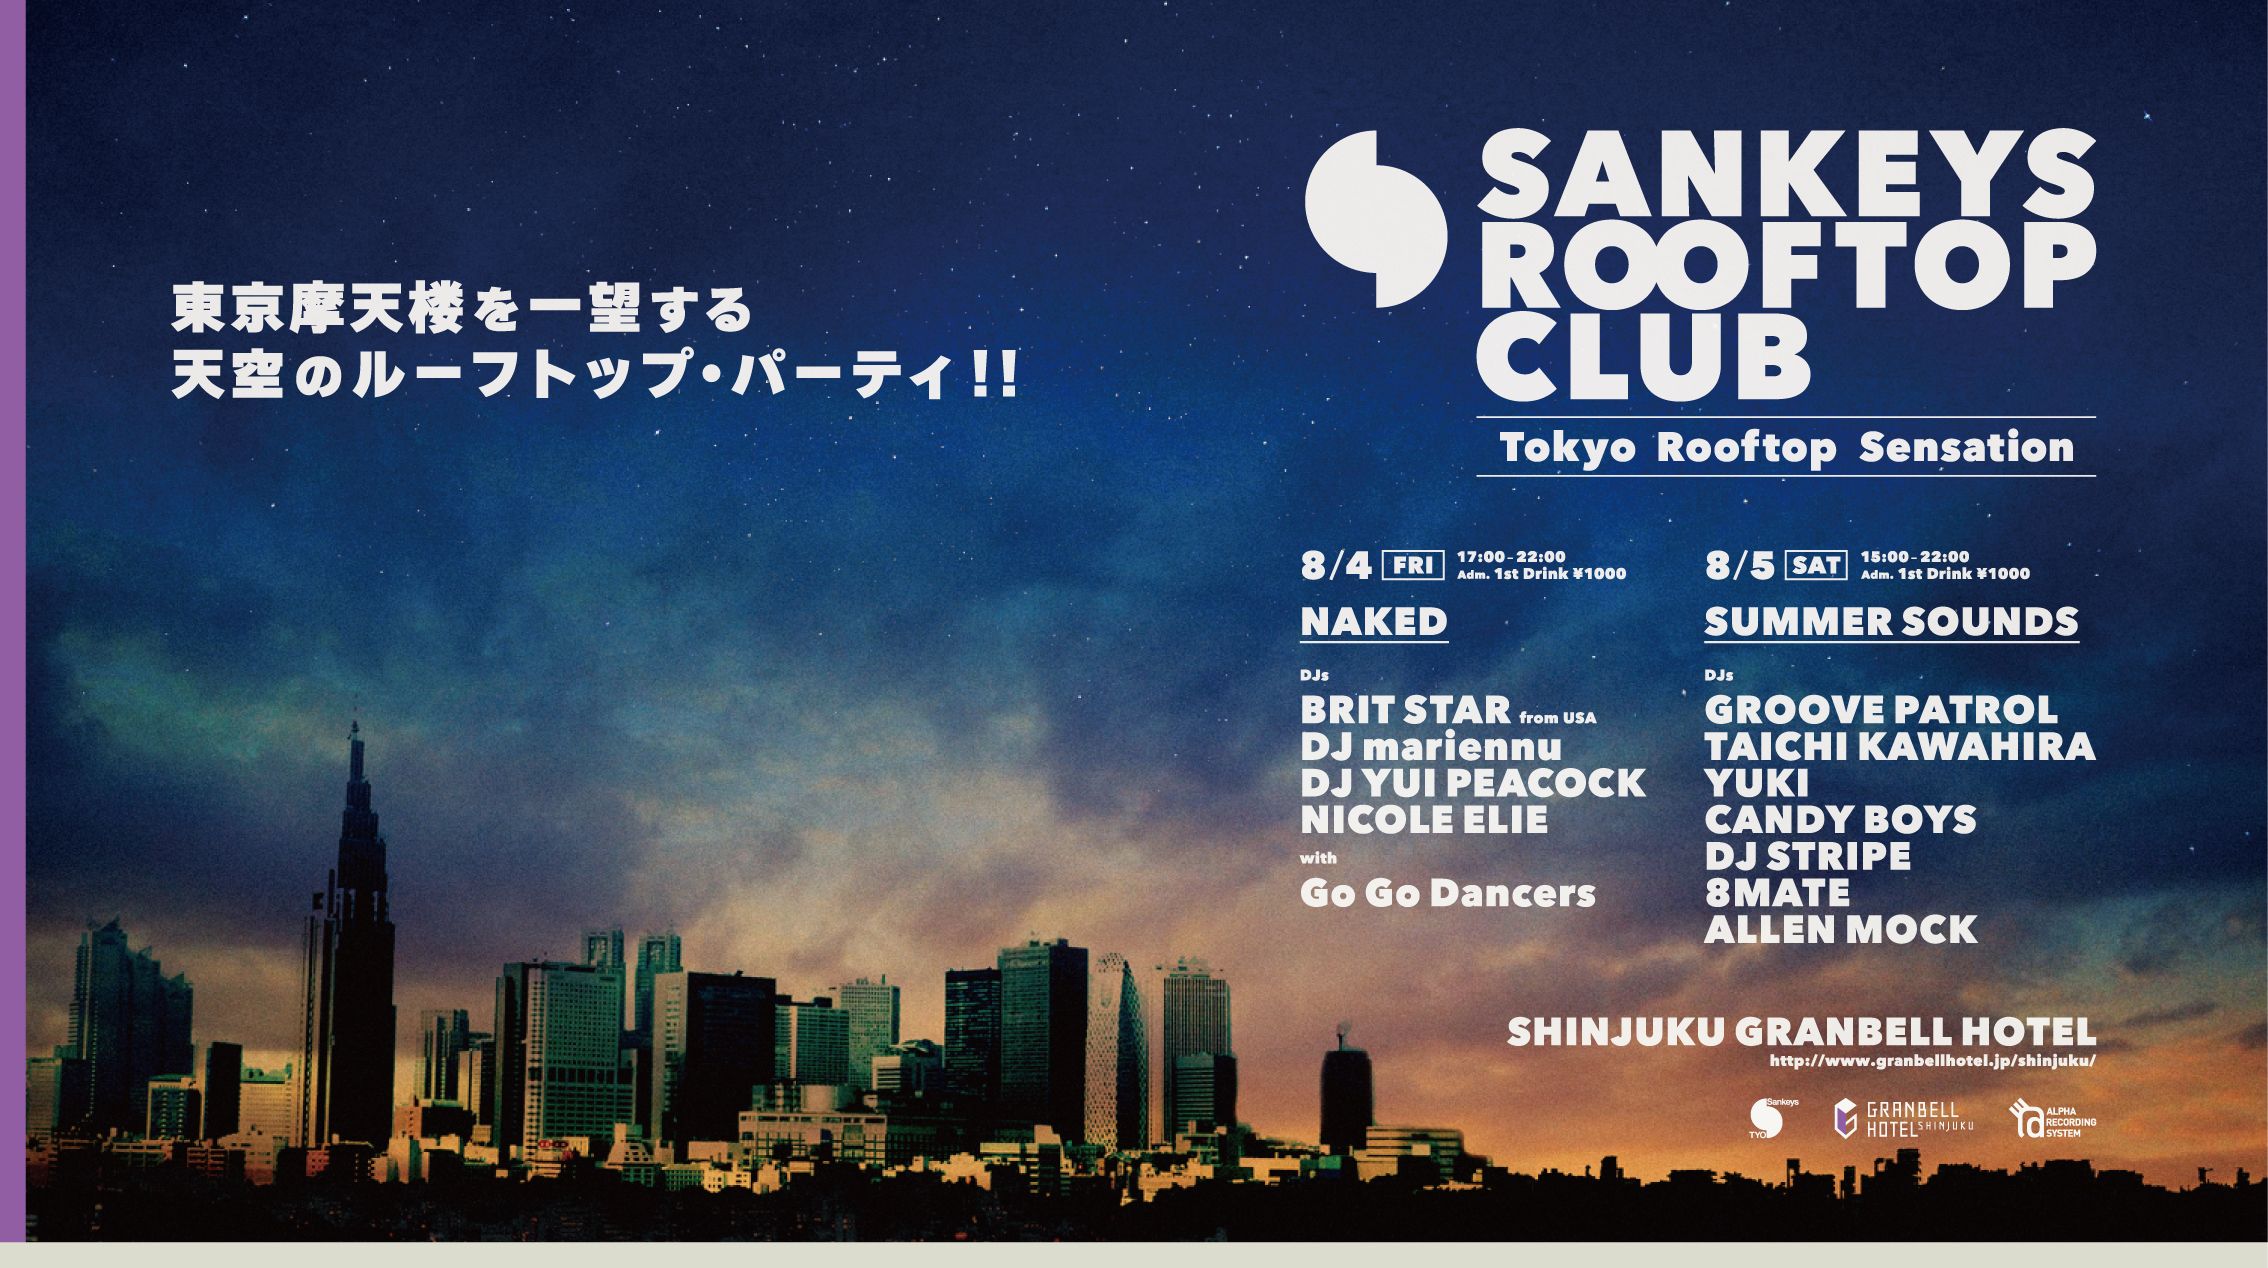 NAKED SANKEYS ROOFTOP CLUB - Tokyo Rooftop Sensation -